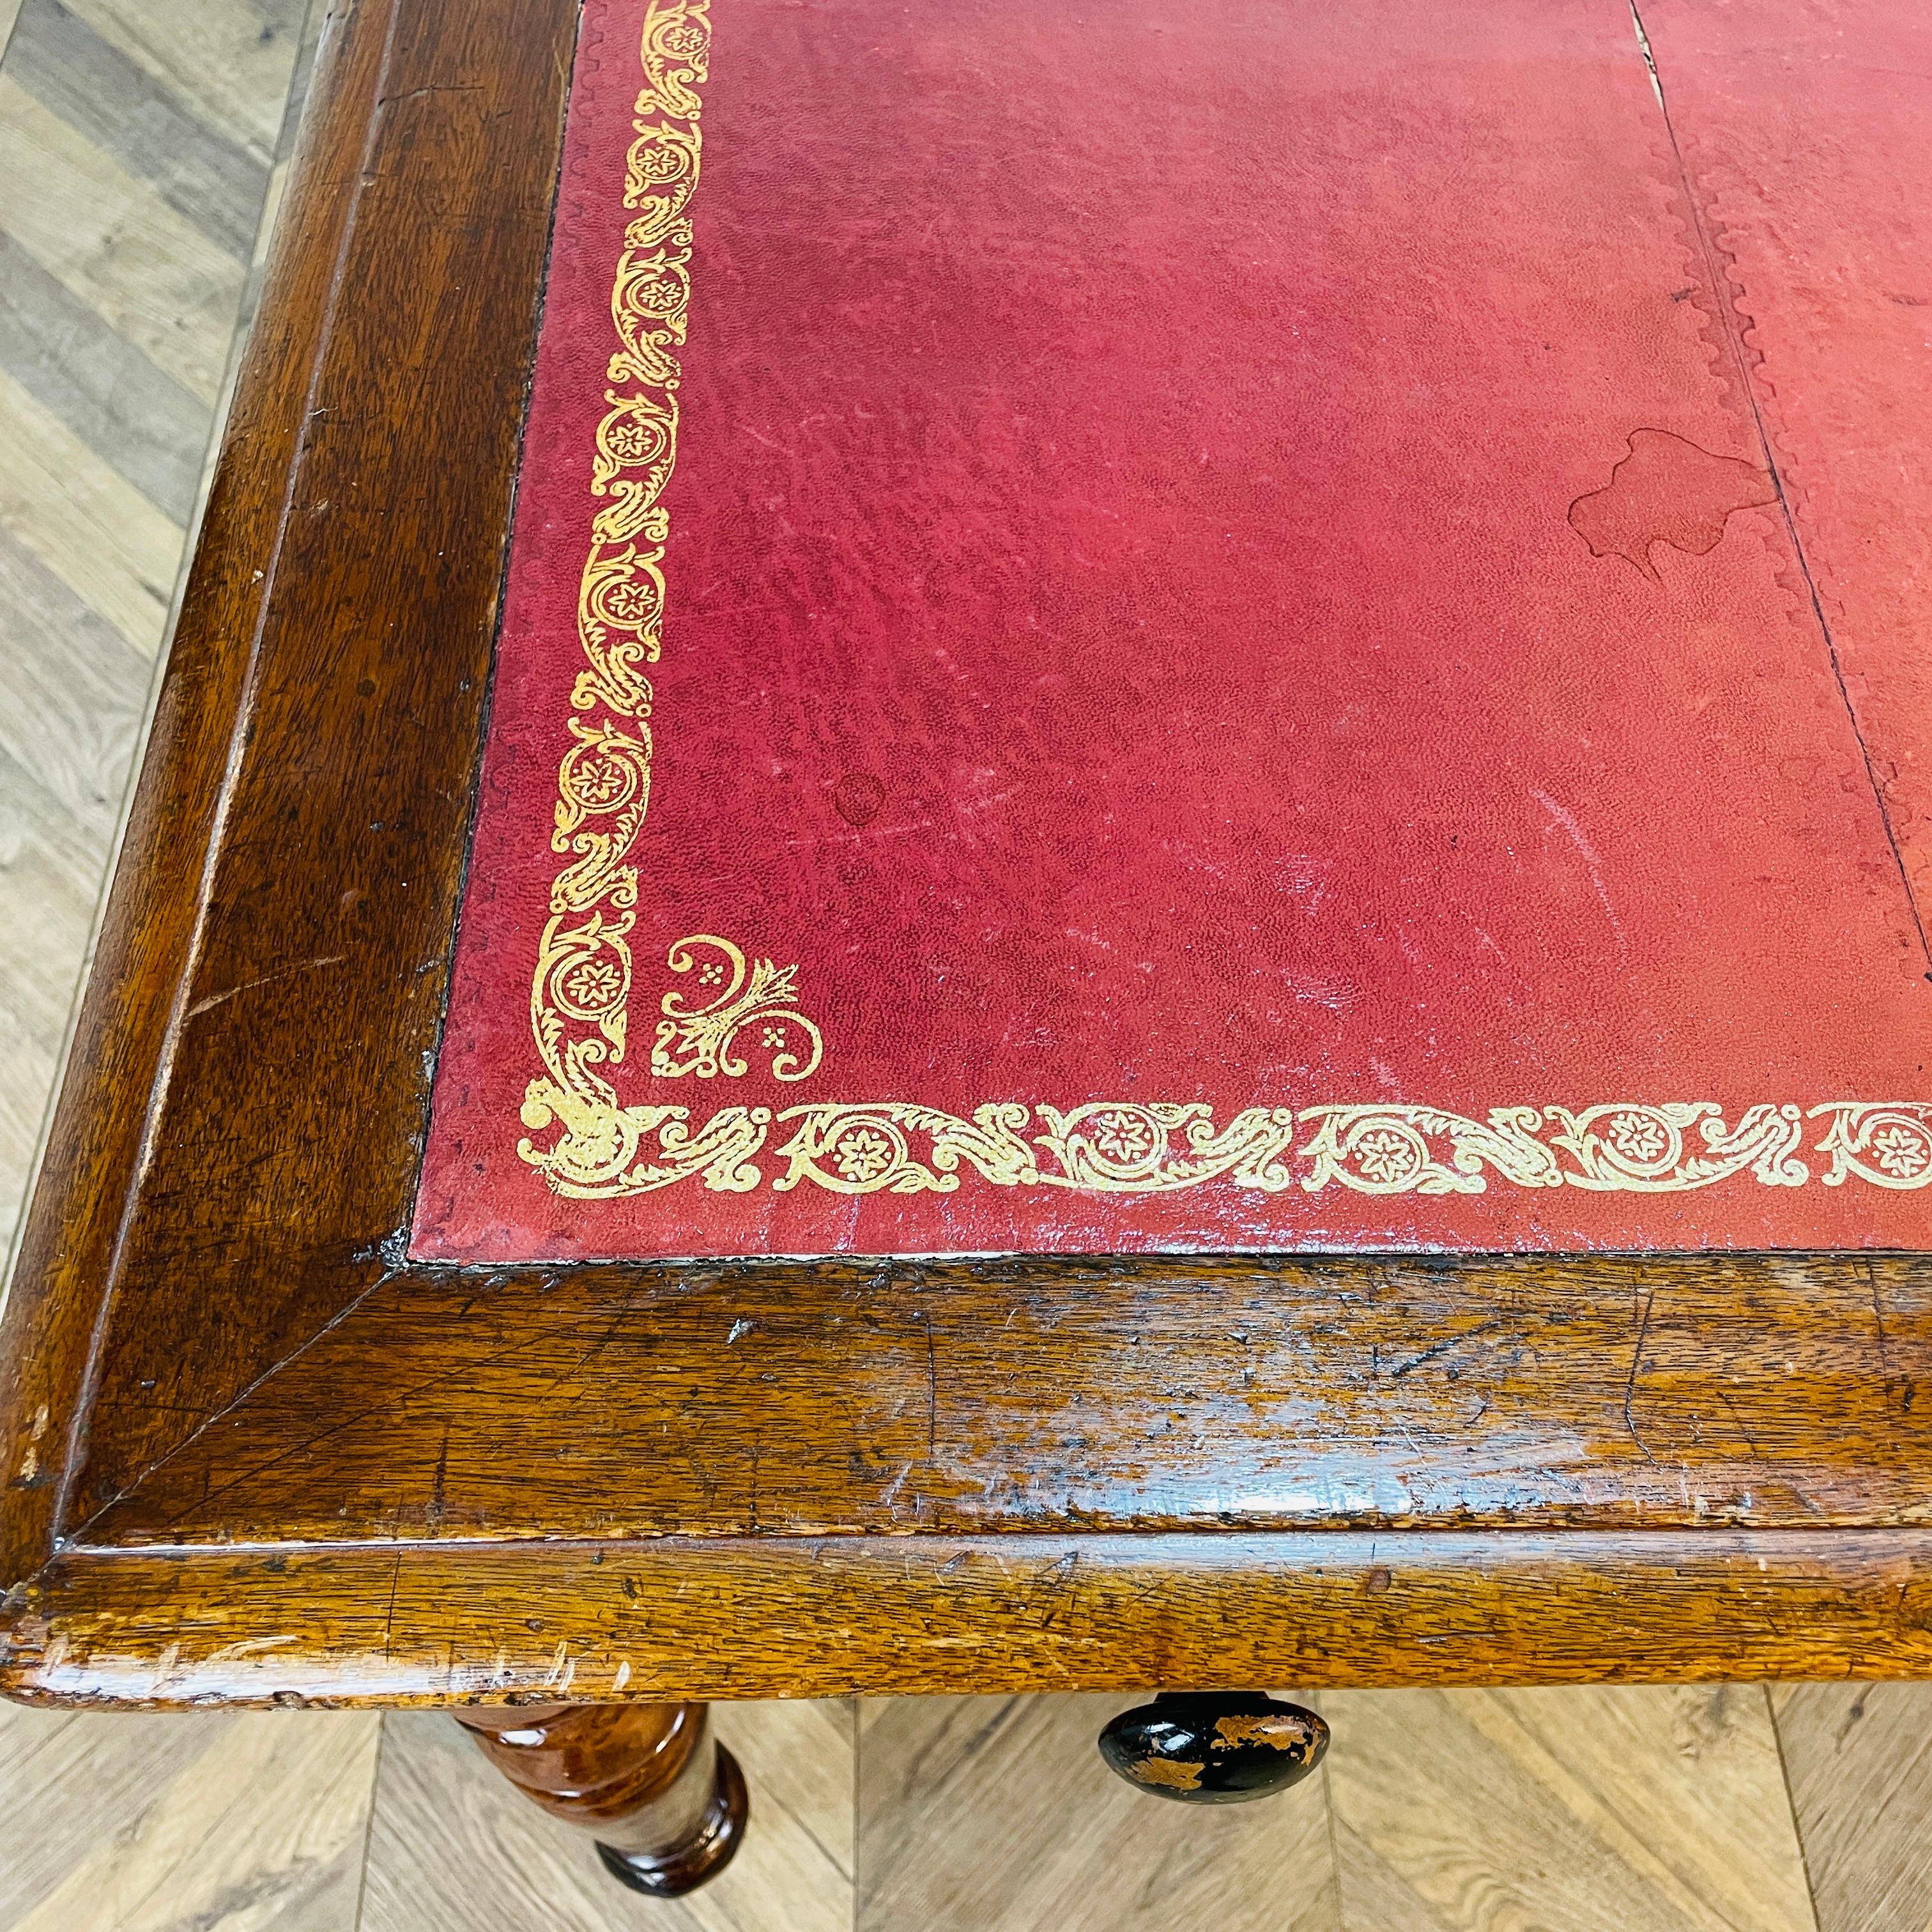 Late 19th Century Antique, Former Cambridge University Library Oak Table, 1890s